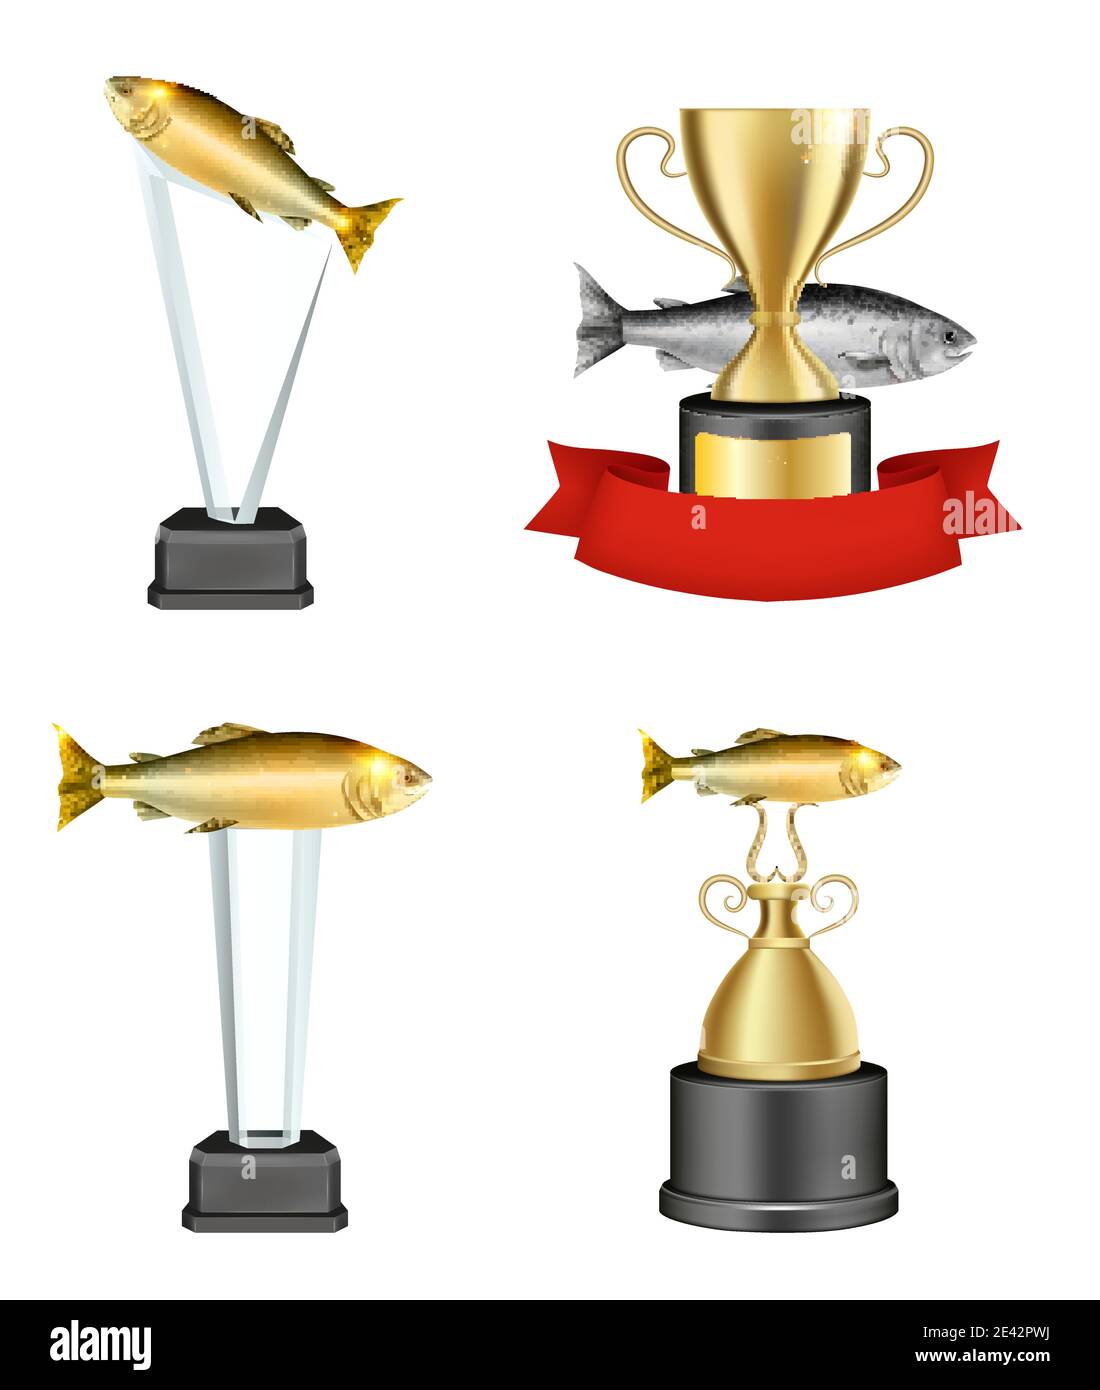 https://c8.alamy.com/comp/2E42PWJ/acrylic-glass-and-metal-fishing-trophy-mockup-set-vector-illustration-realistic-fishing-championship-winner-awards-2E42PWJ.jpg